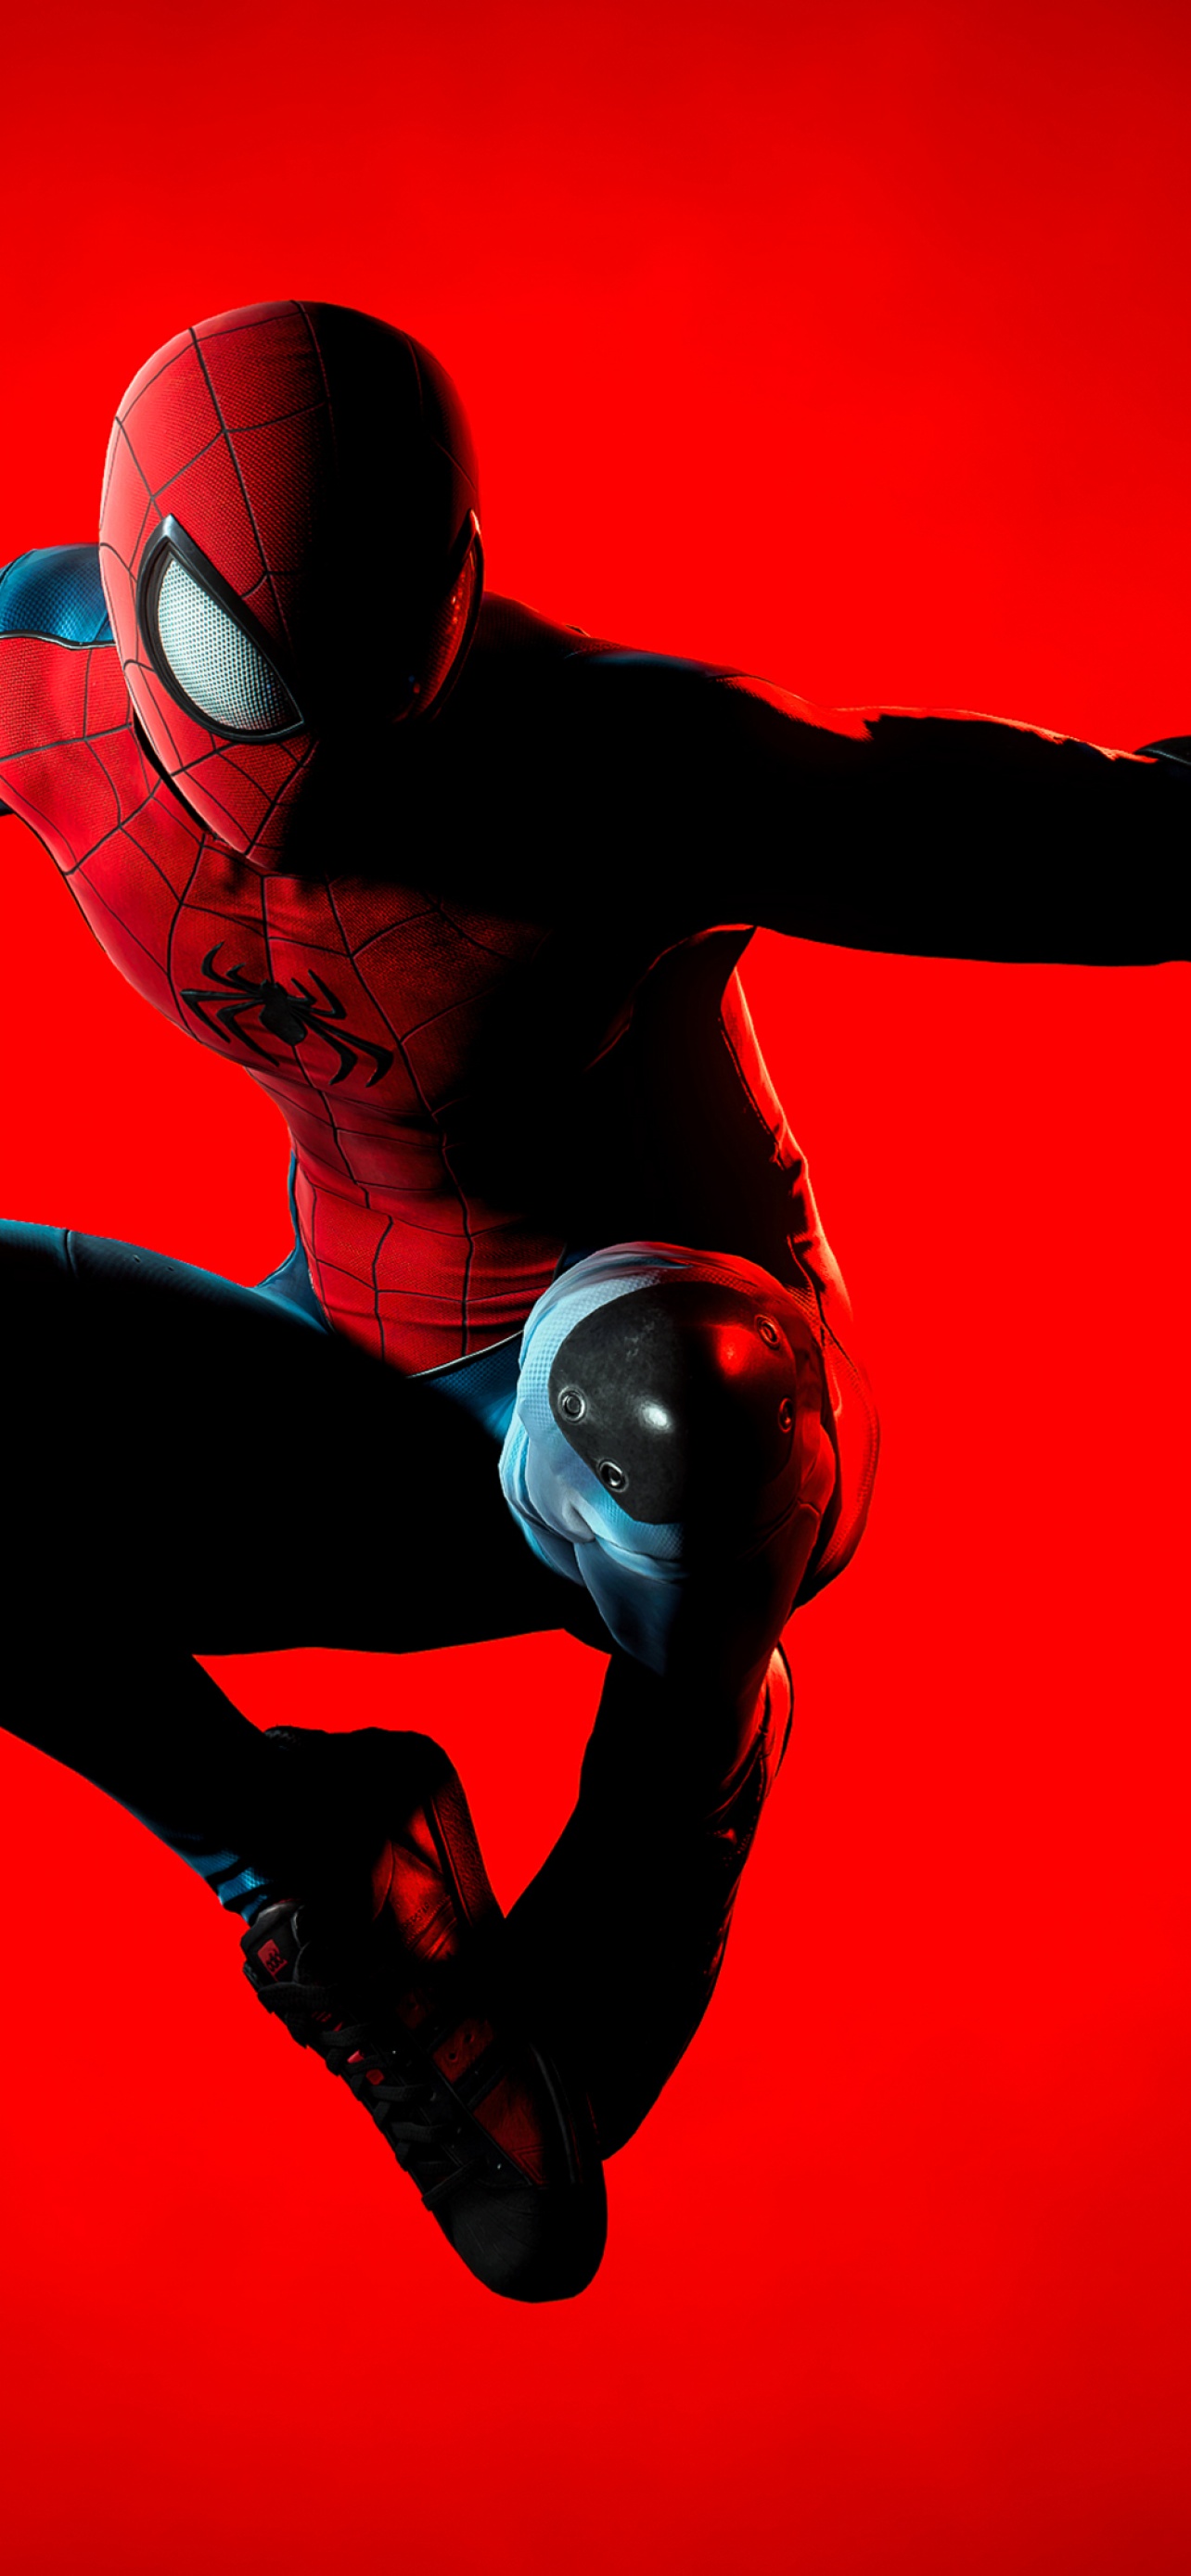 Spider-Man Wallpaper 4K, Marvel Superheroes, Graphics CGI, #7493